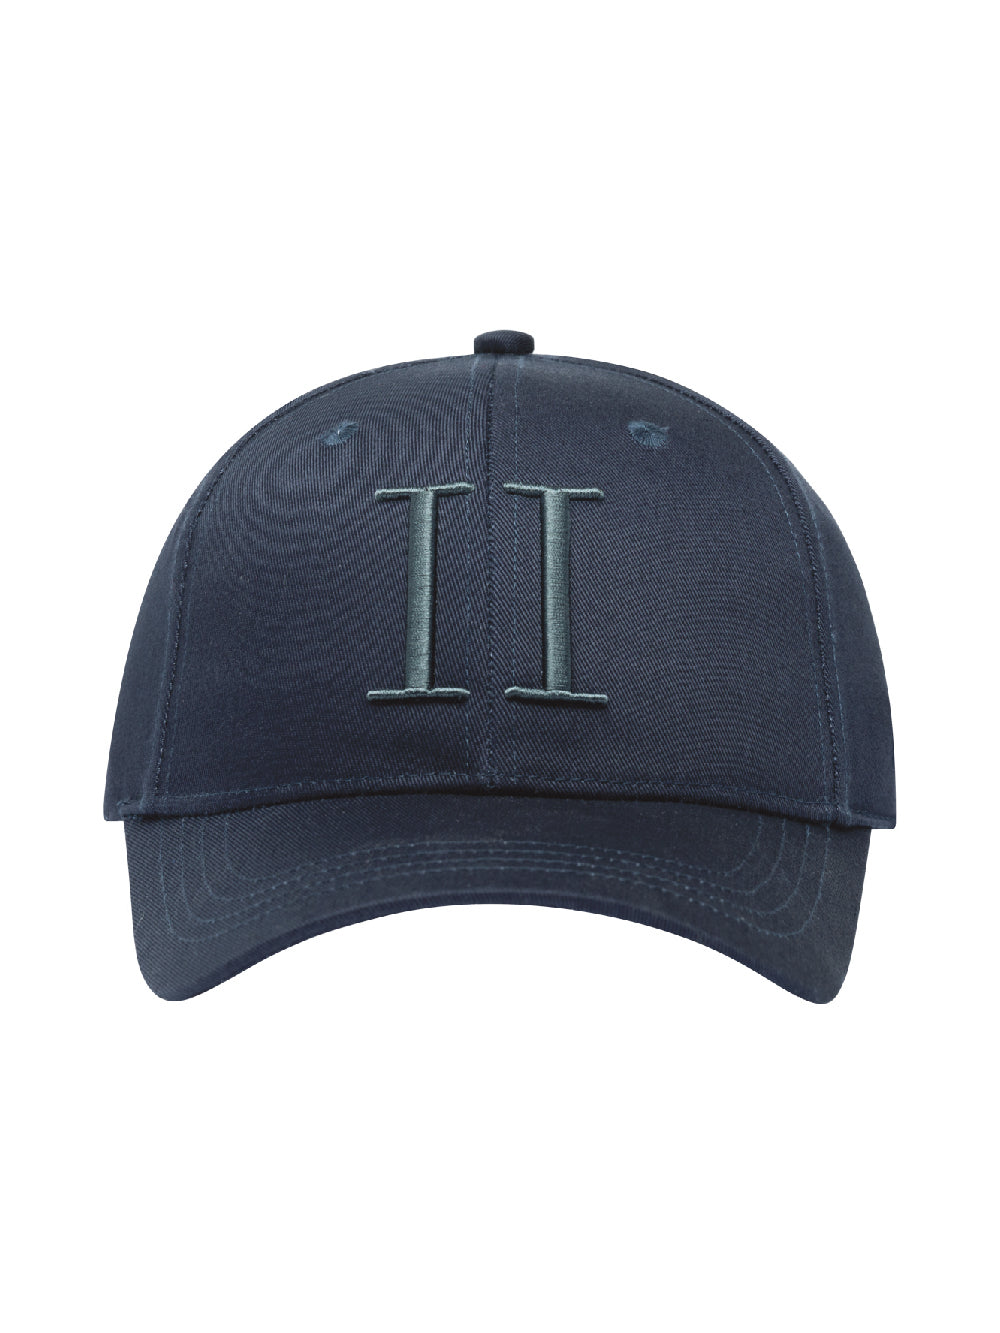 Les Deux Baseball Caps - Dark Navy/Turbulence Blue